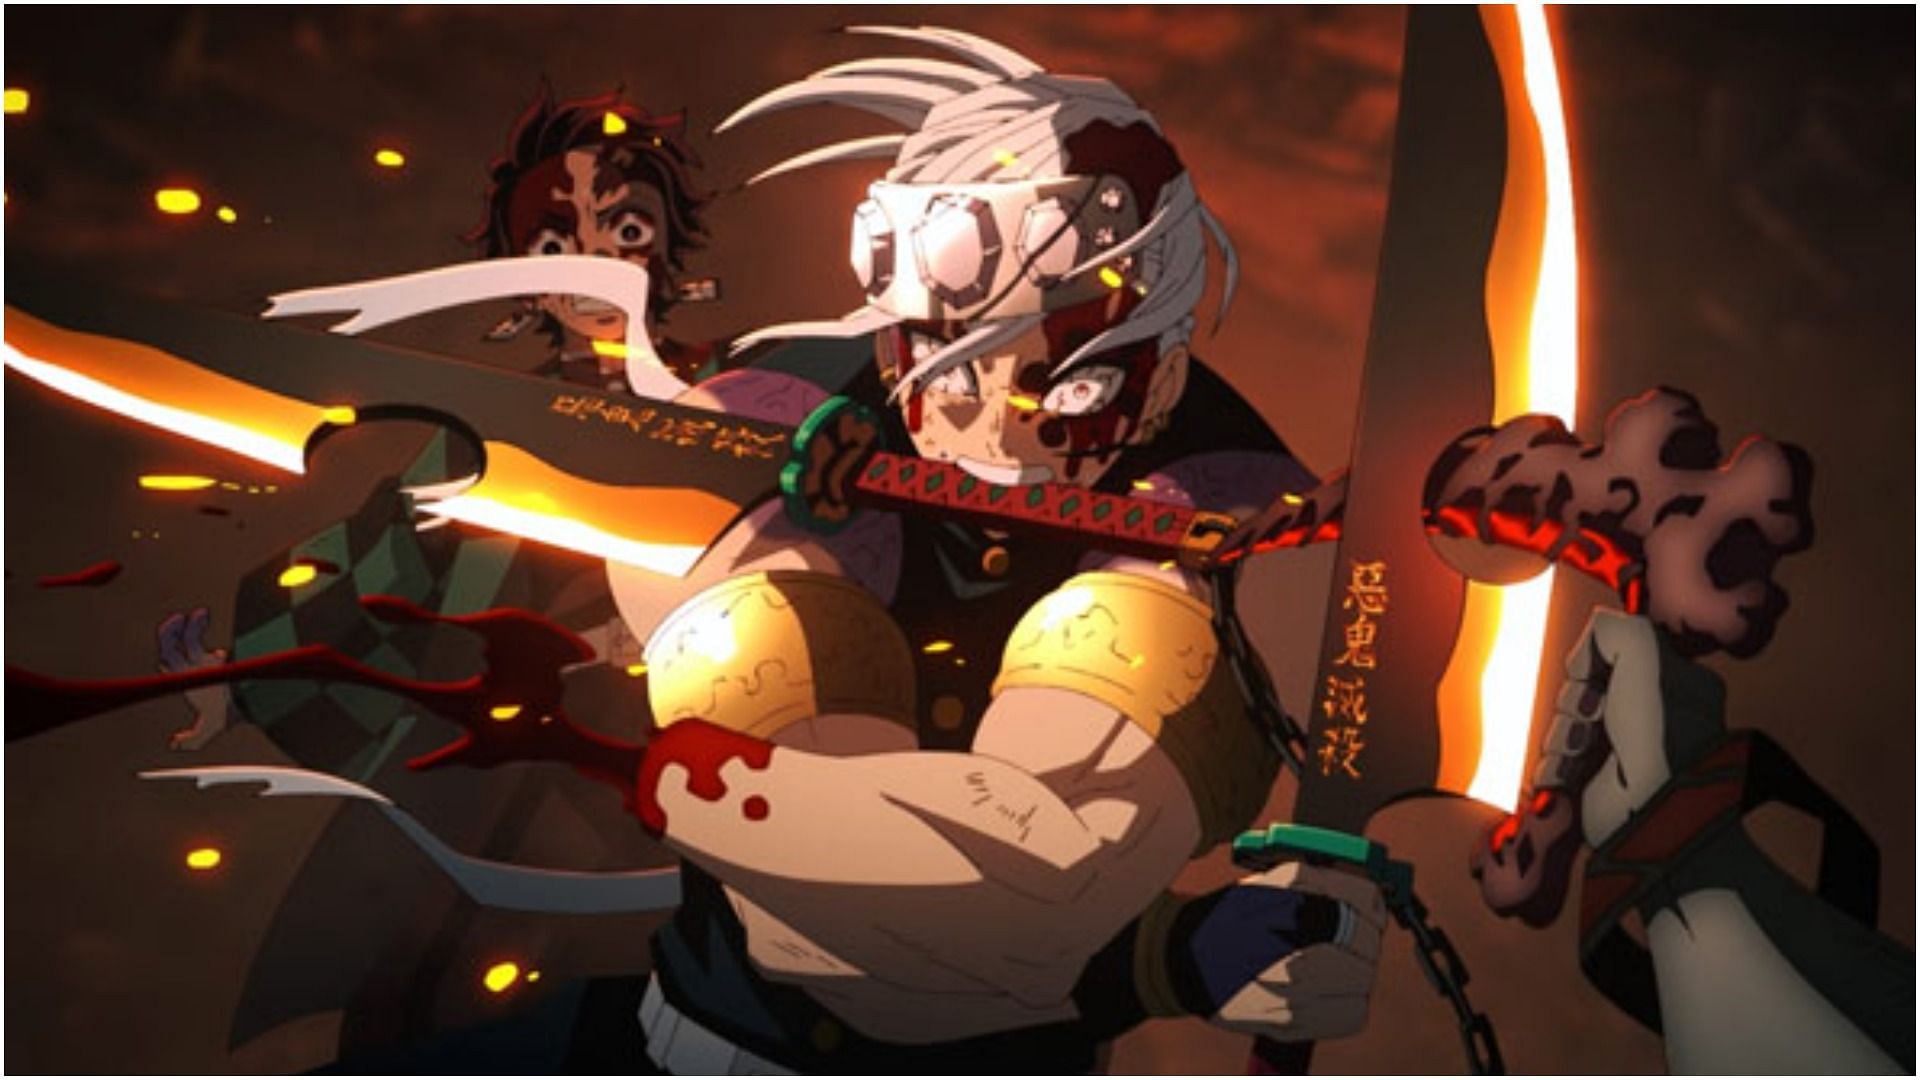 Tengen Uzui as seen in the anime Demon Slayer: Kimetsu no Yaiba (Image via Ufotable)